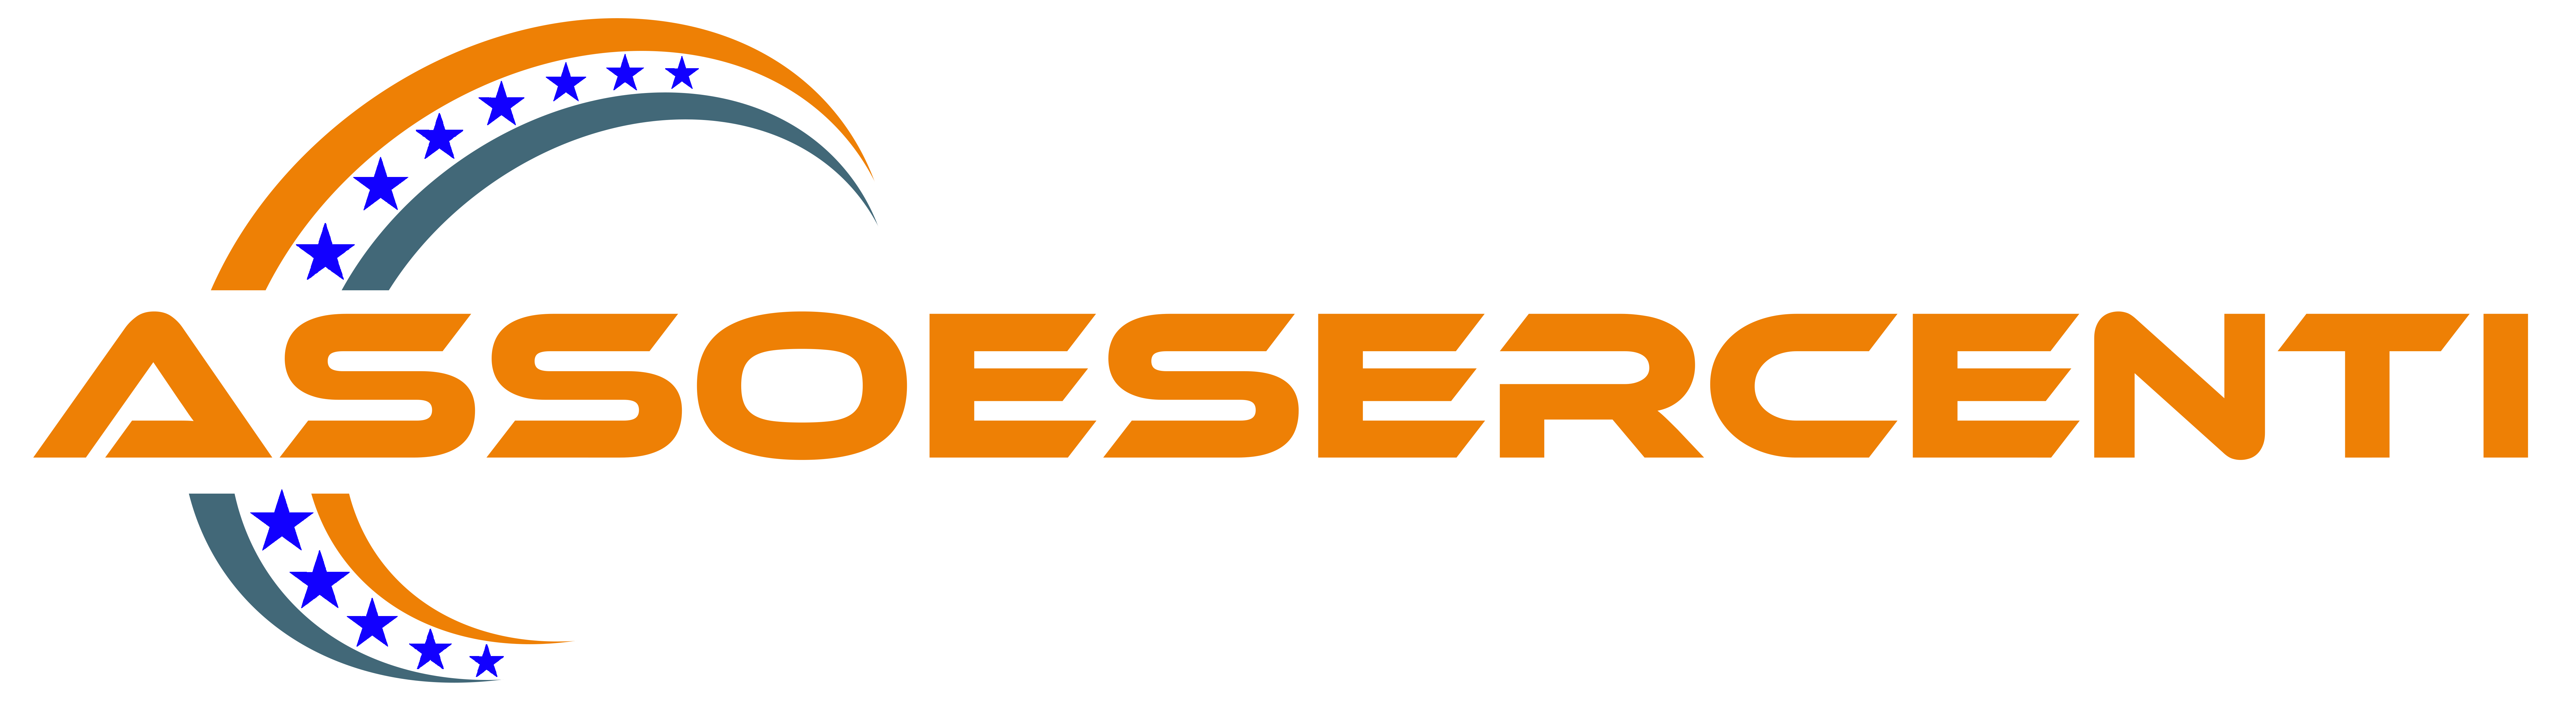 logo-assoesercenti.png